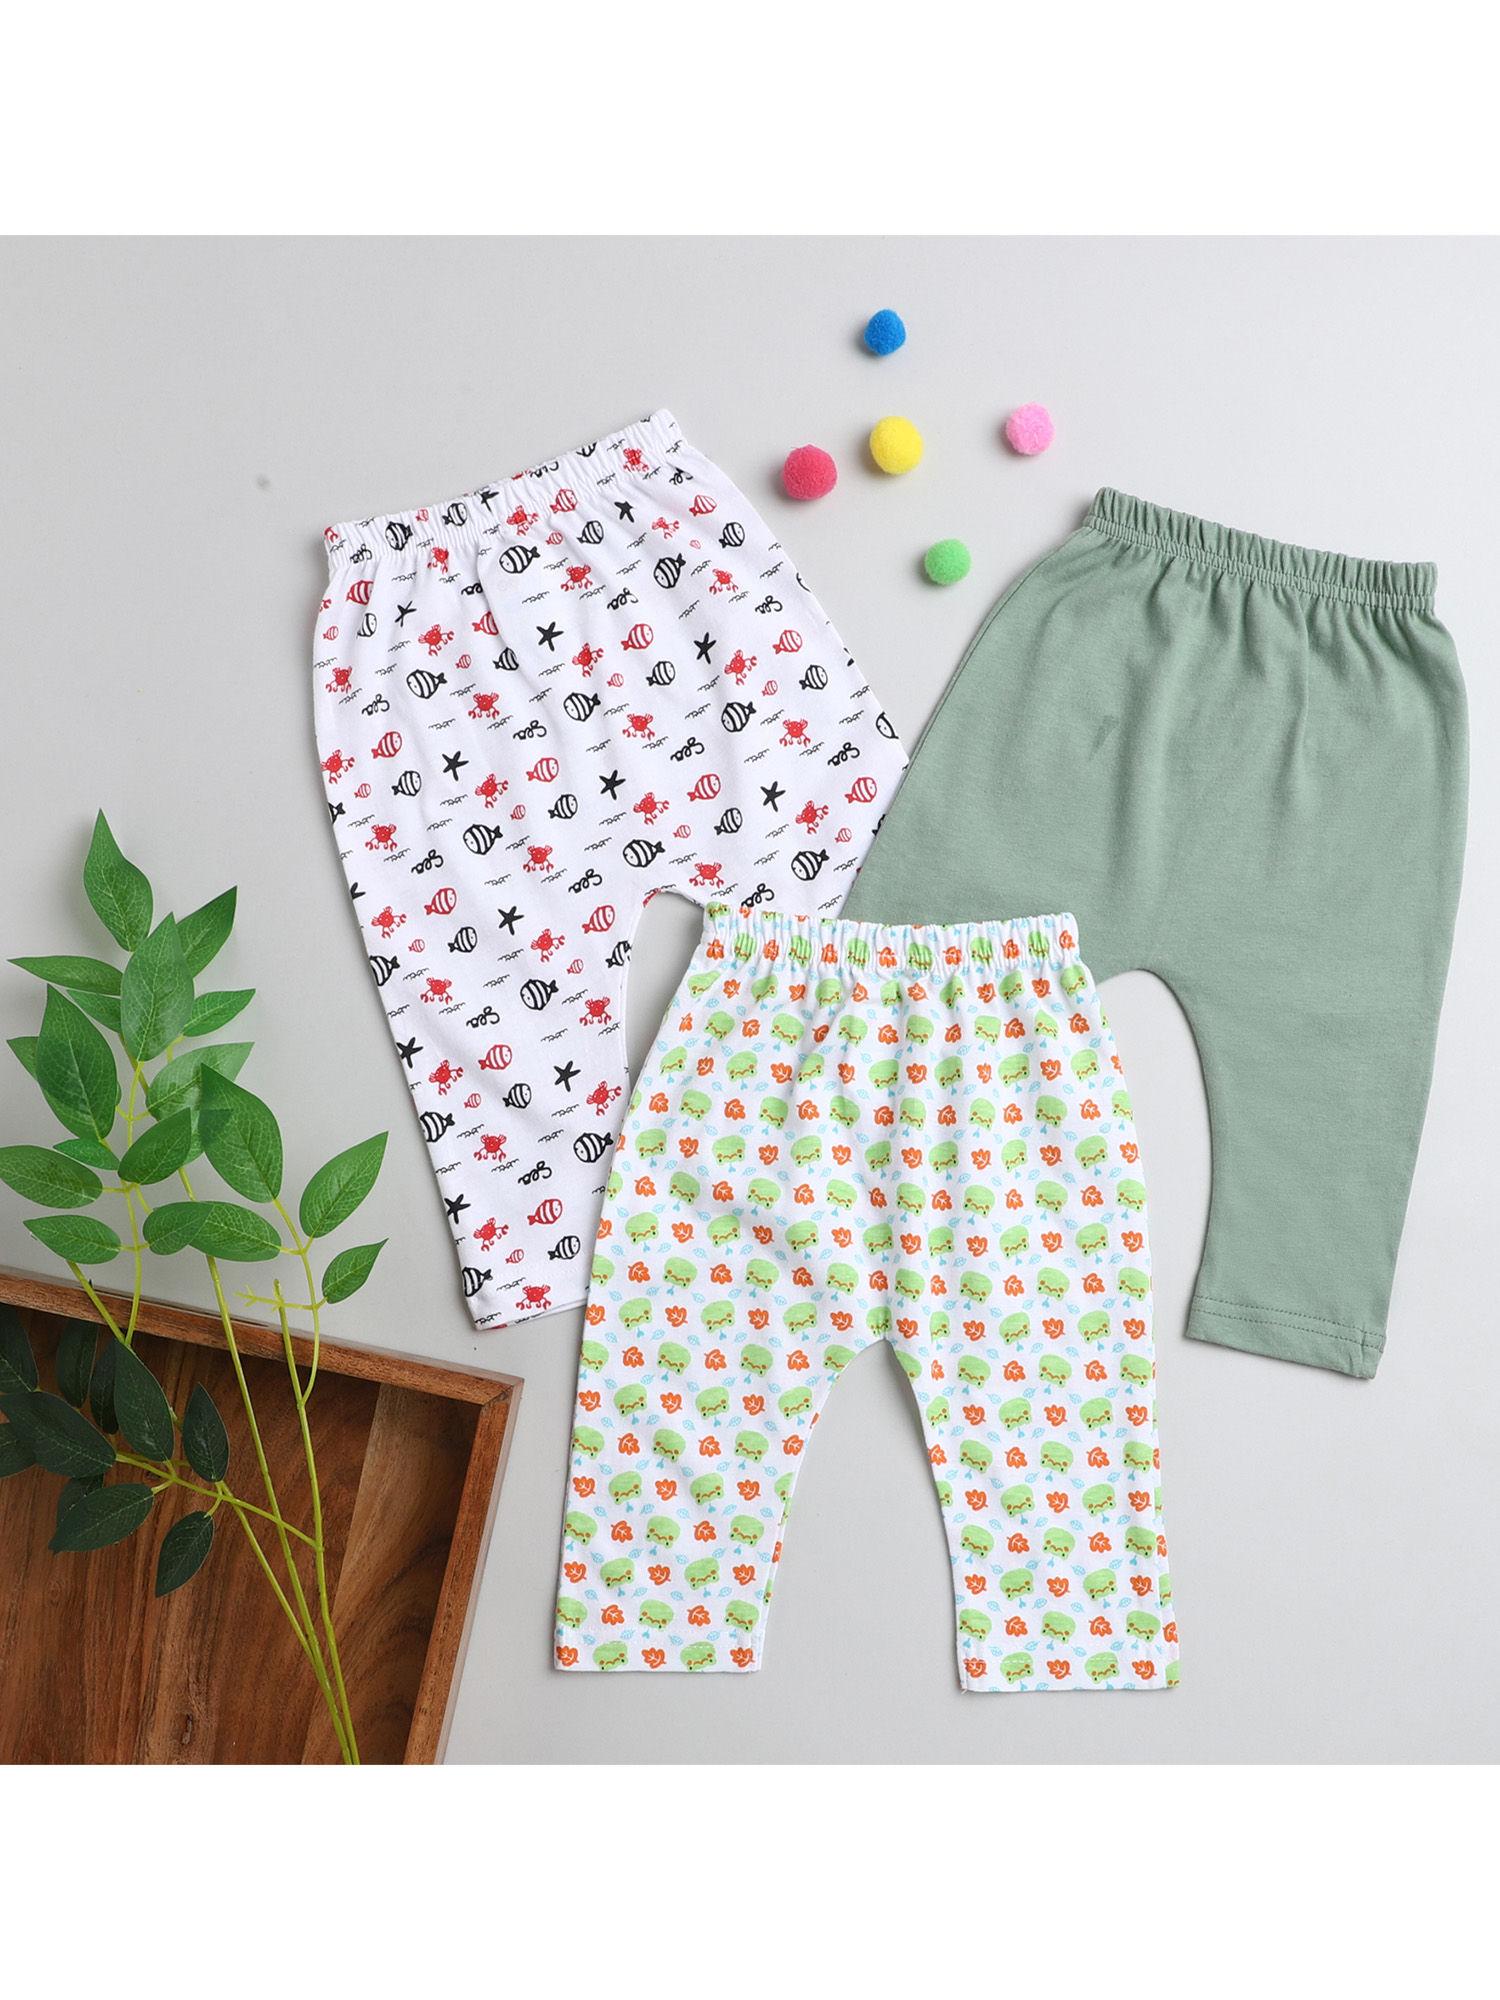 green & white boys diaper pants / leggings / pyjamas (pack of 3)